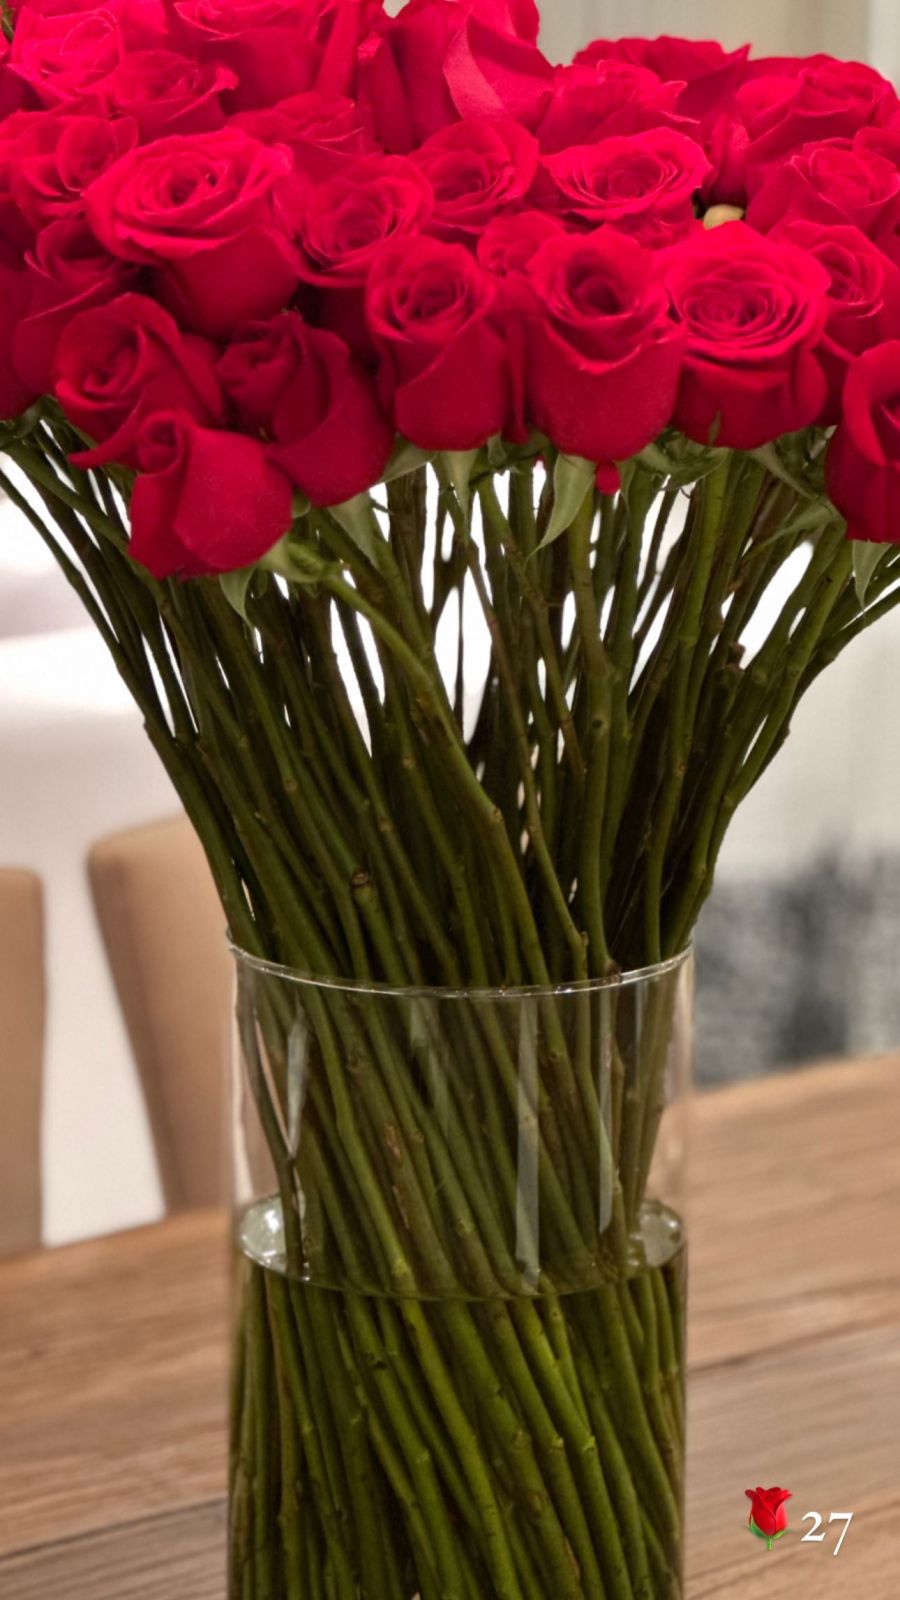 El mensaje oculto detrás del enorme ramo de rosas que Wanda Nara recibió: “Me parece mentira”